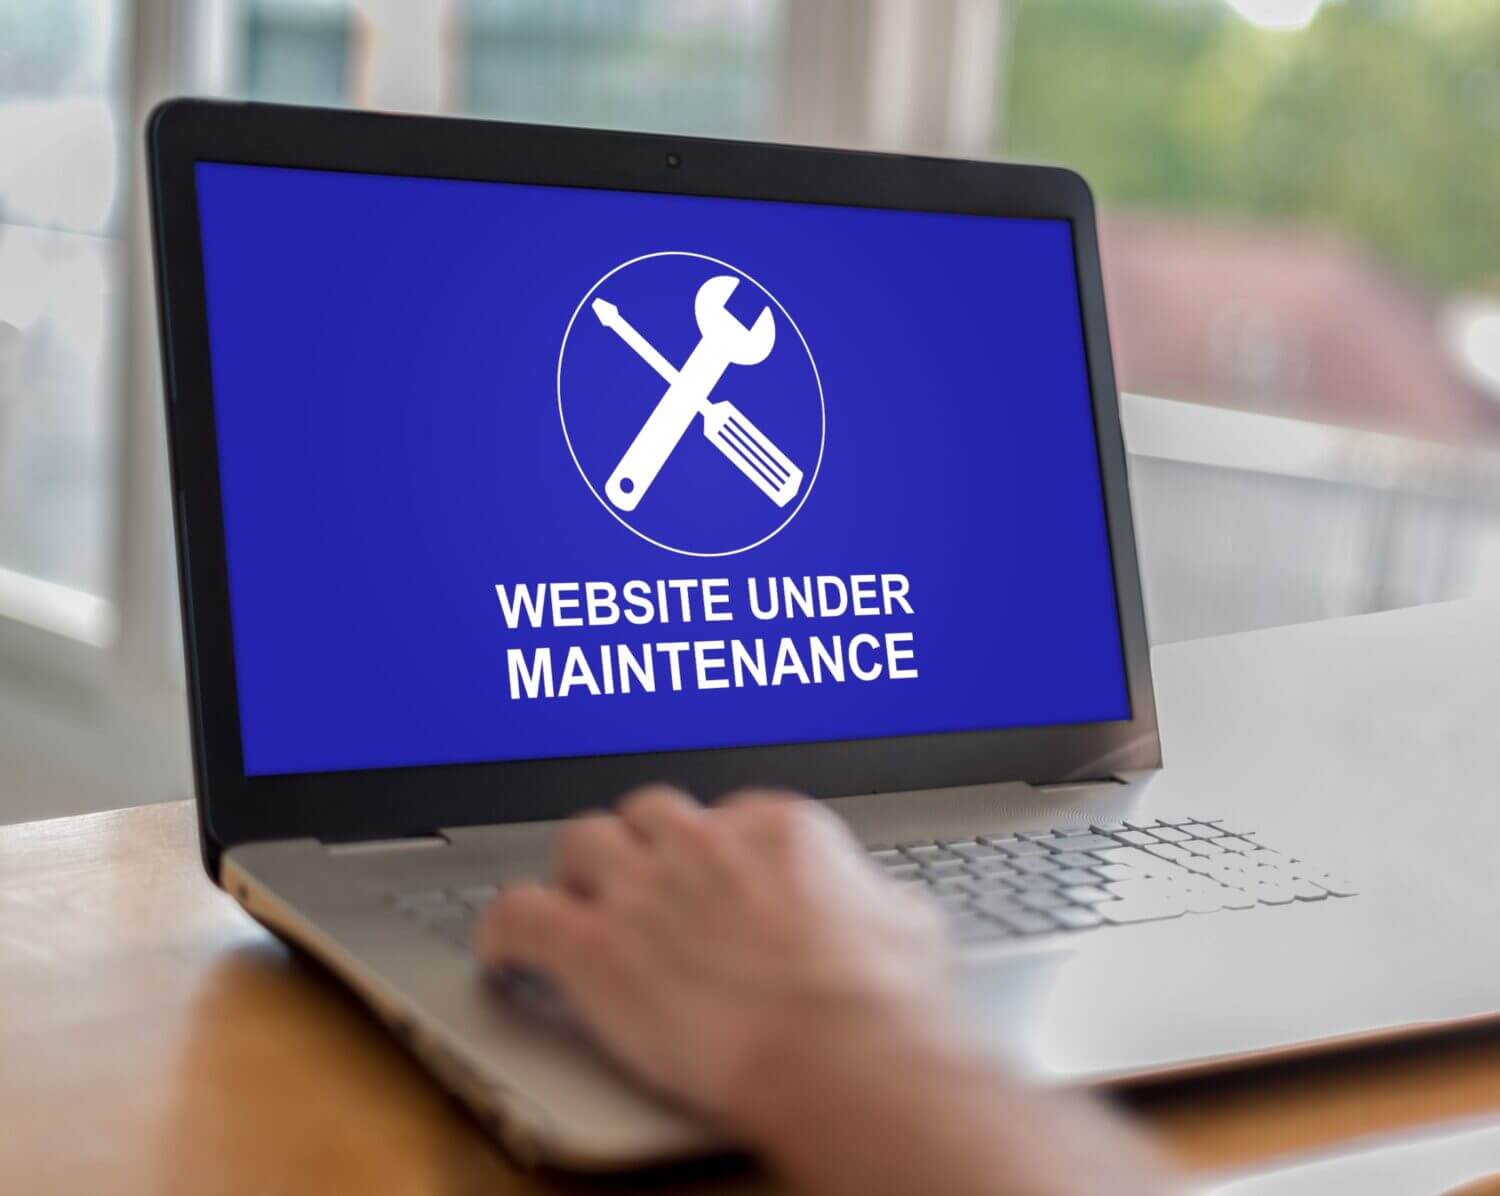 Website Maintenance Graphic on a laptop screen